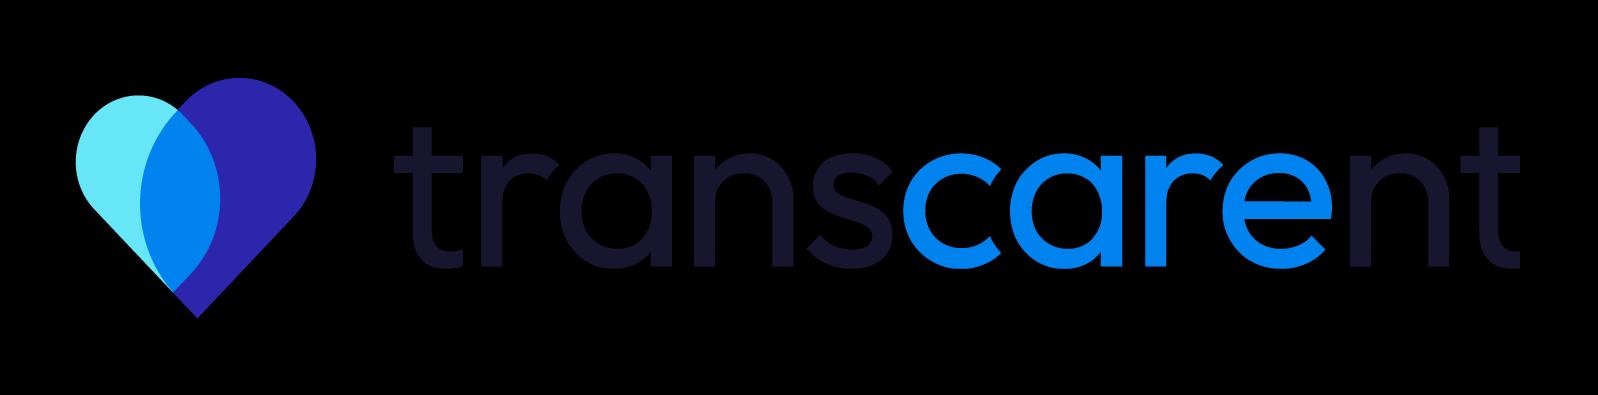 Transcarent_logo